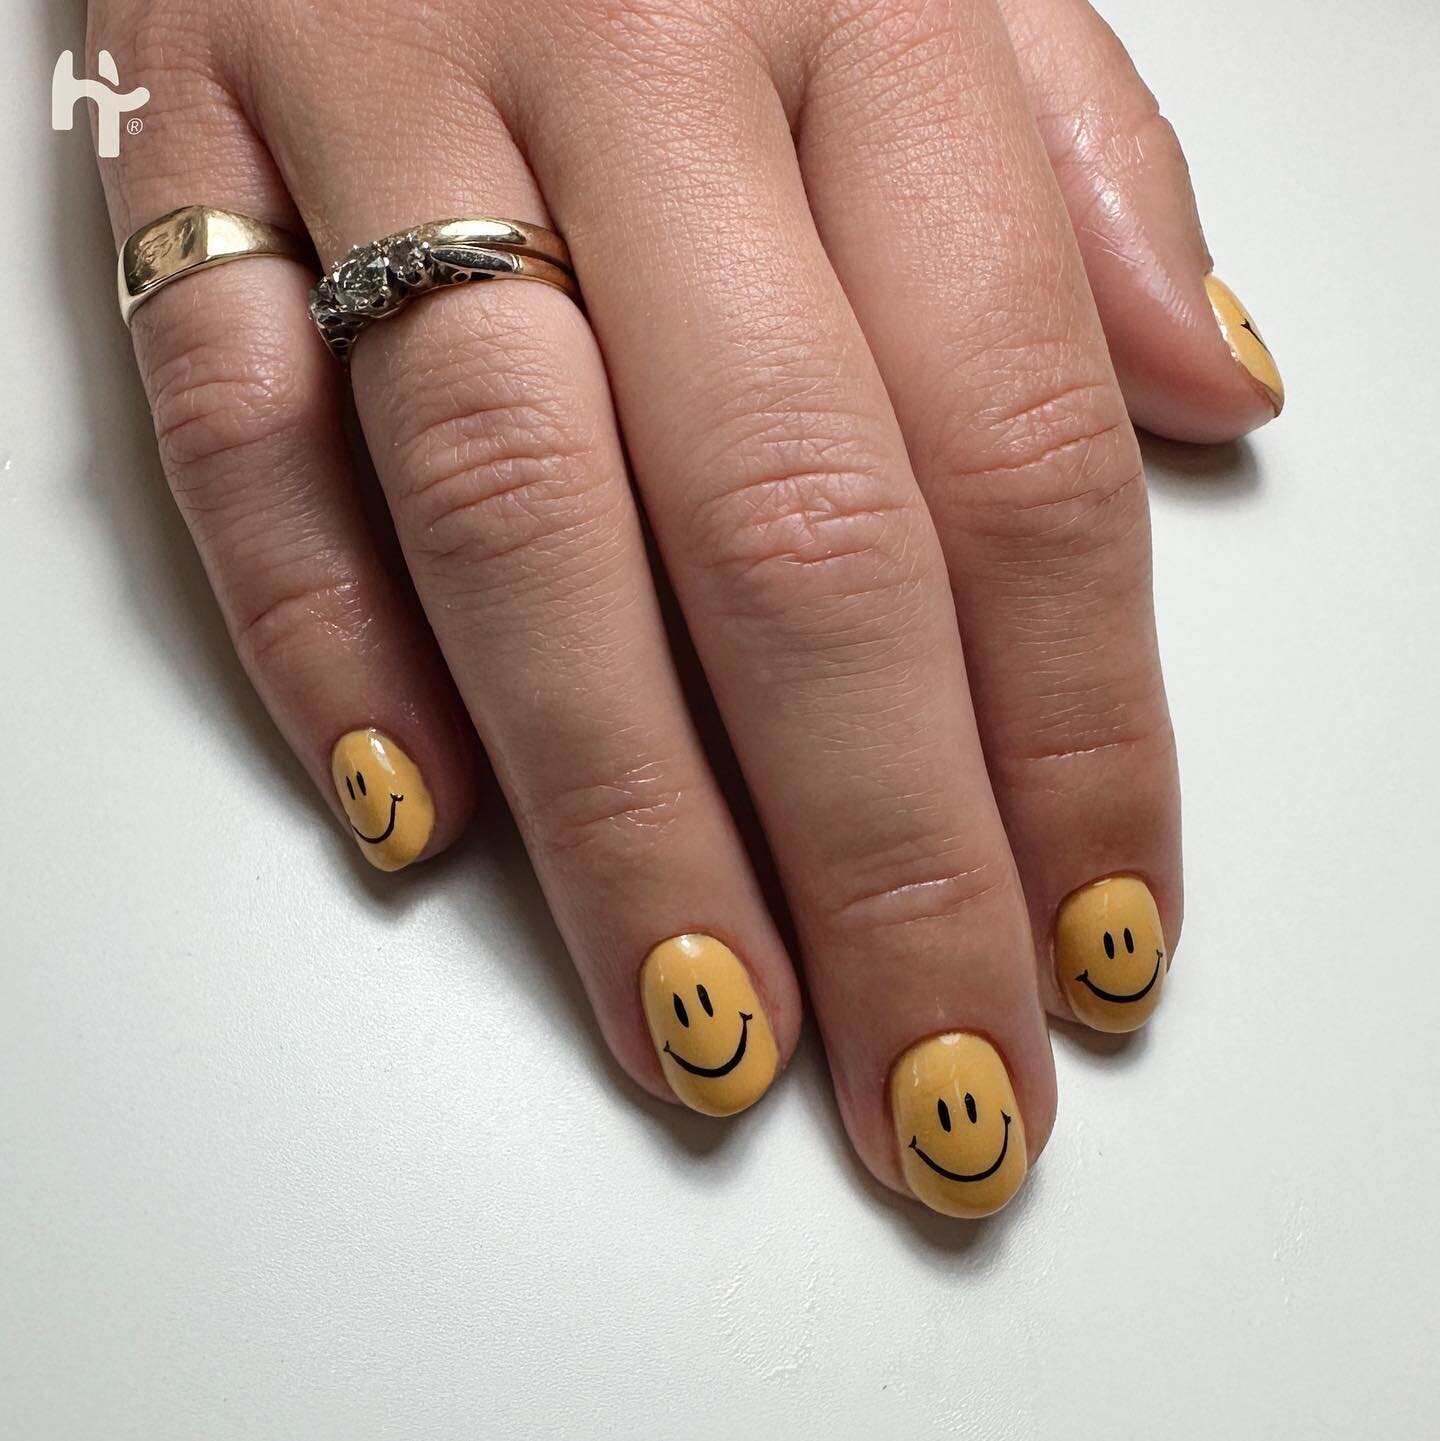 Smile 😊 #nails #nailart #smileynails #utrecht #nagelsalonutrecht #nailartstudio